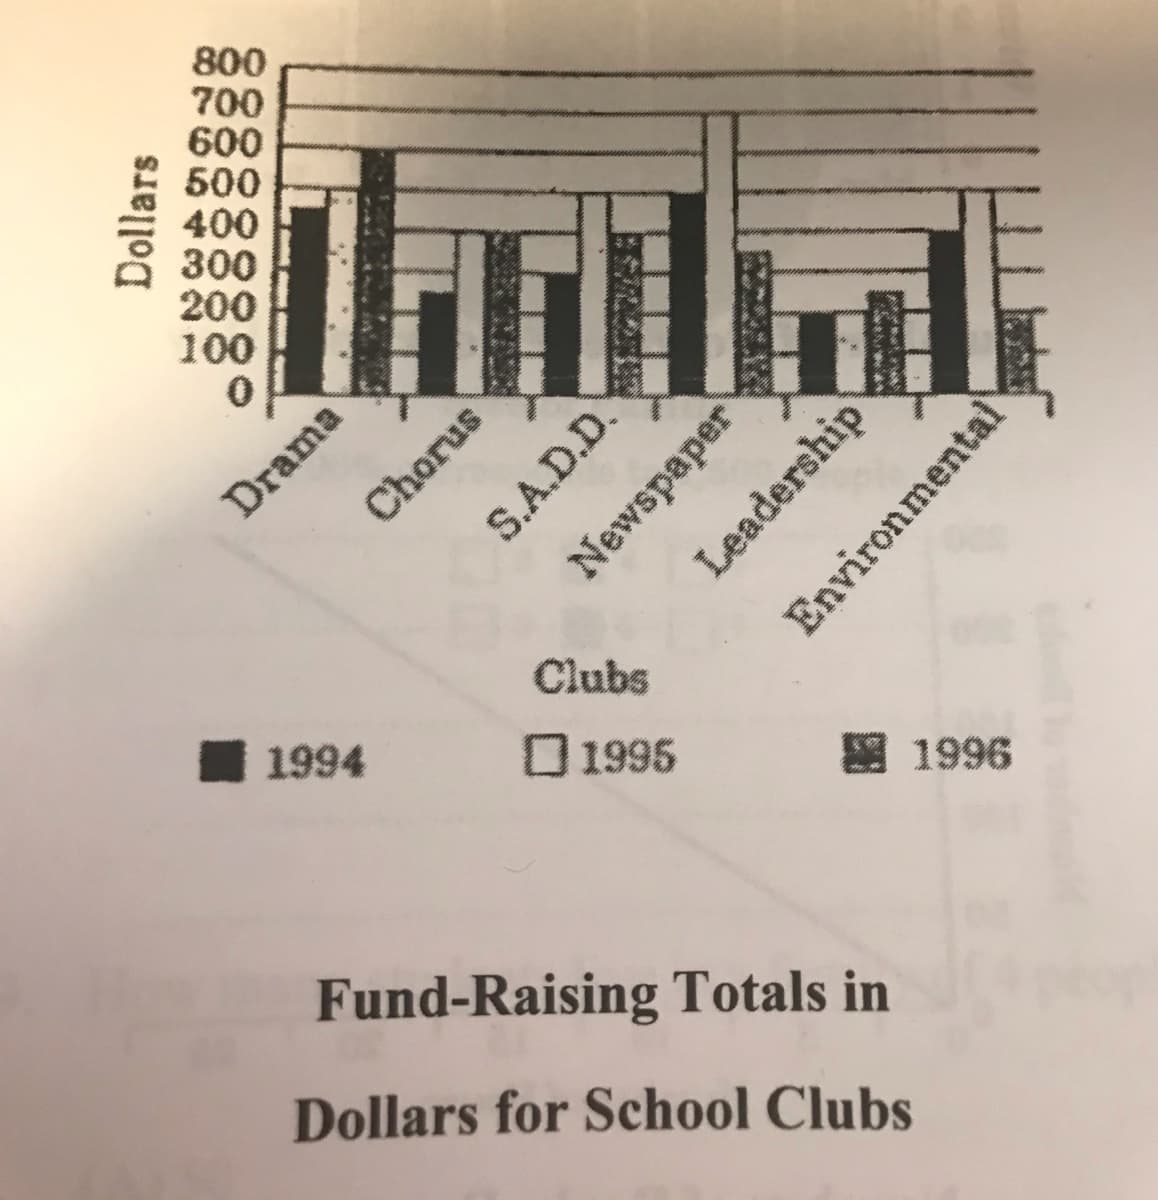 800
700
600
500
400
300
200
100
Drama
Chorus
Clubs
1994
O 1995
1996
Fund-Raising Totals in
Dollars for School Clubs
Dollars
S.A.D.D.
Newspaper
Leadership
Environmental
